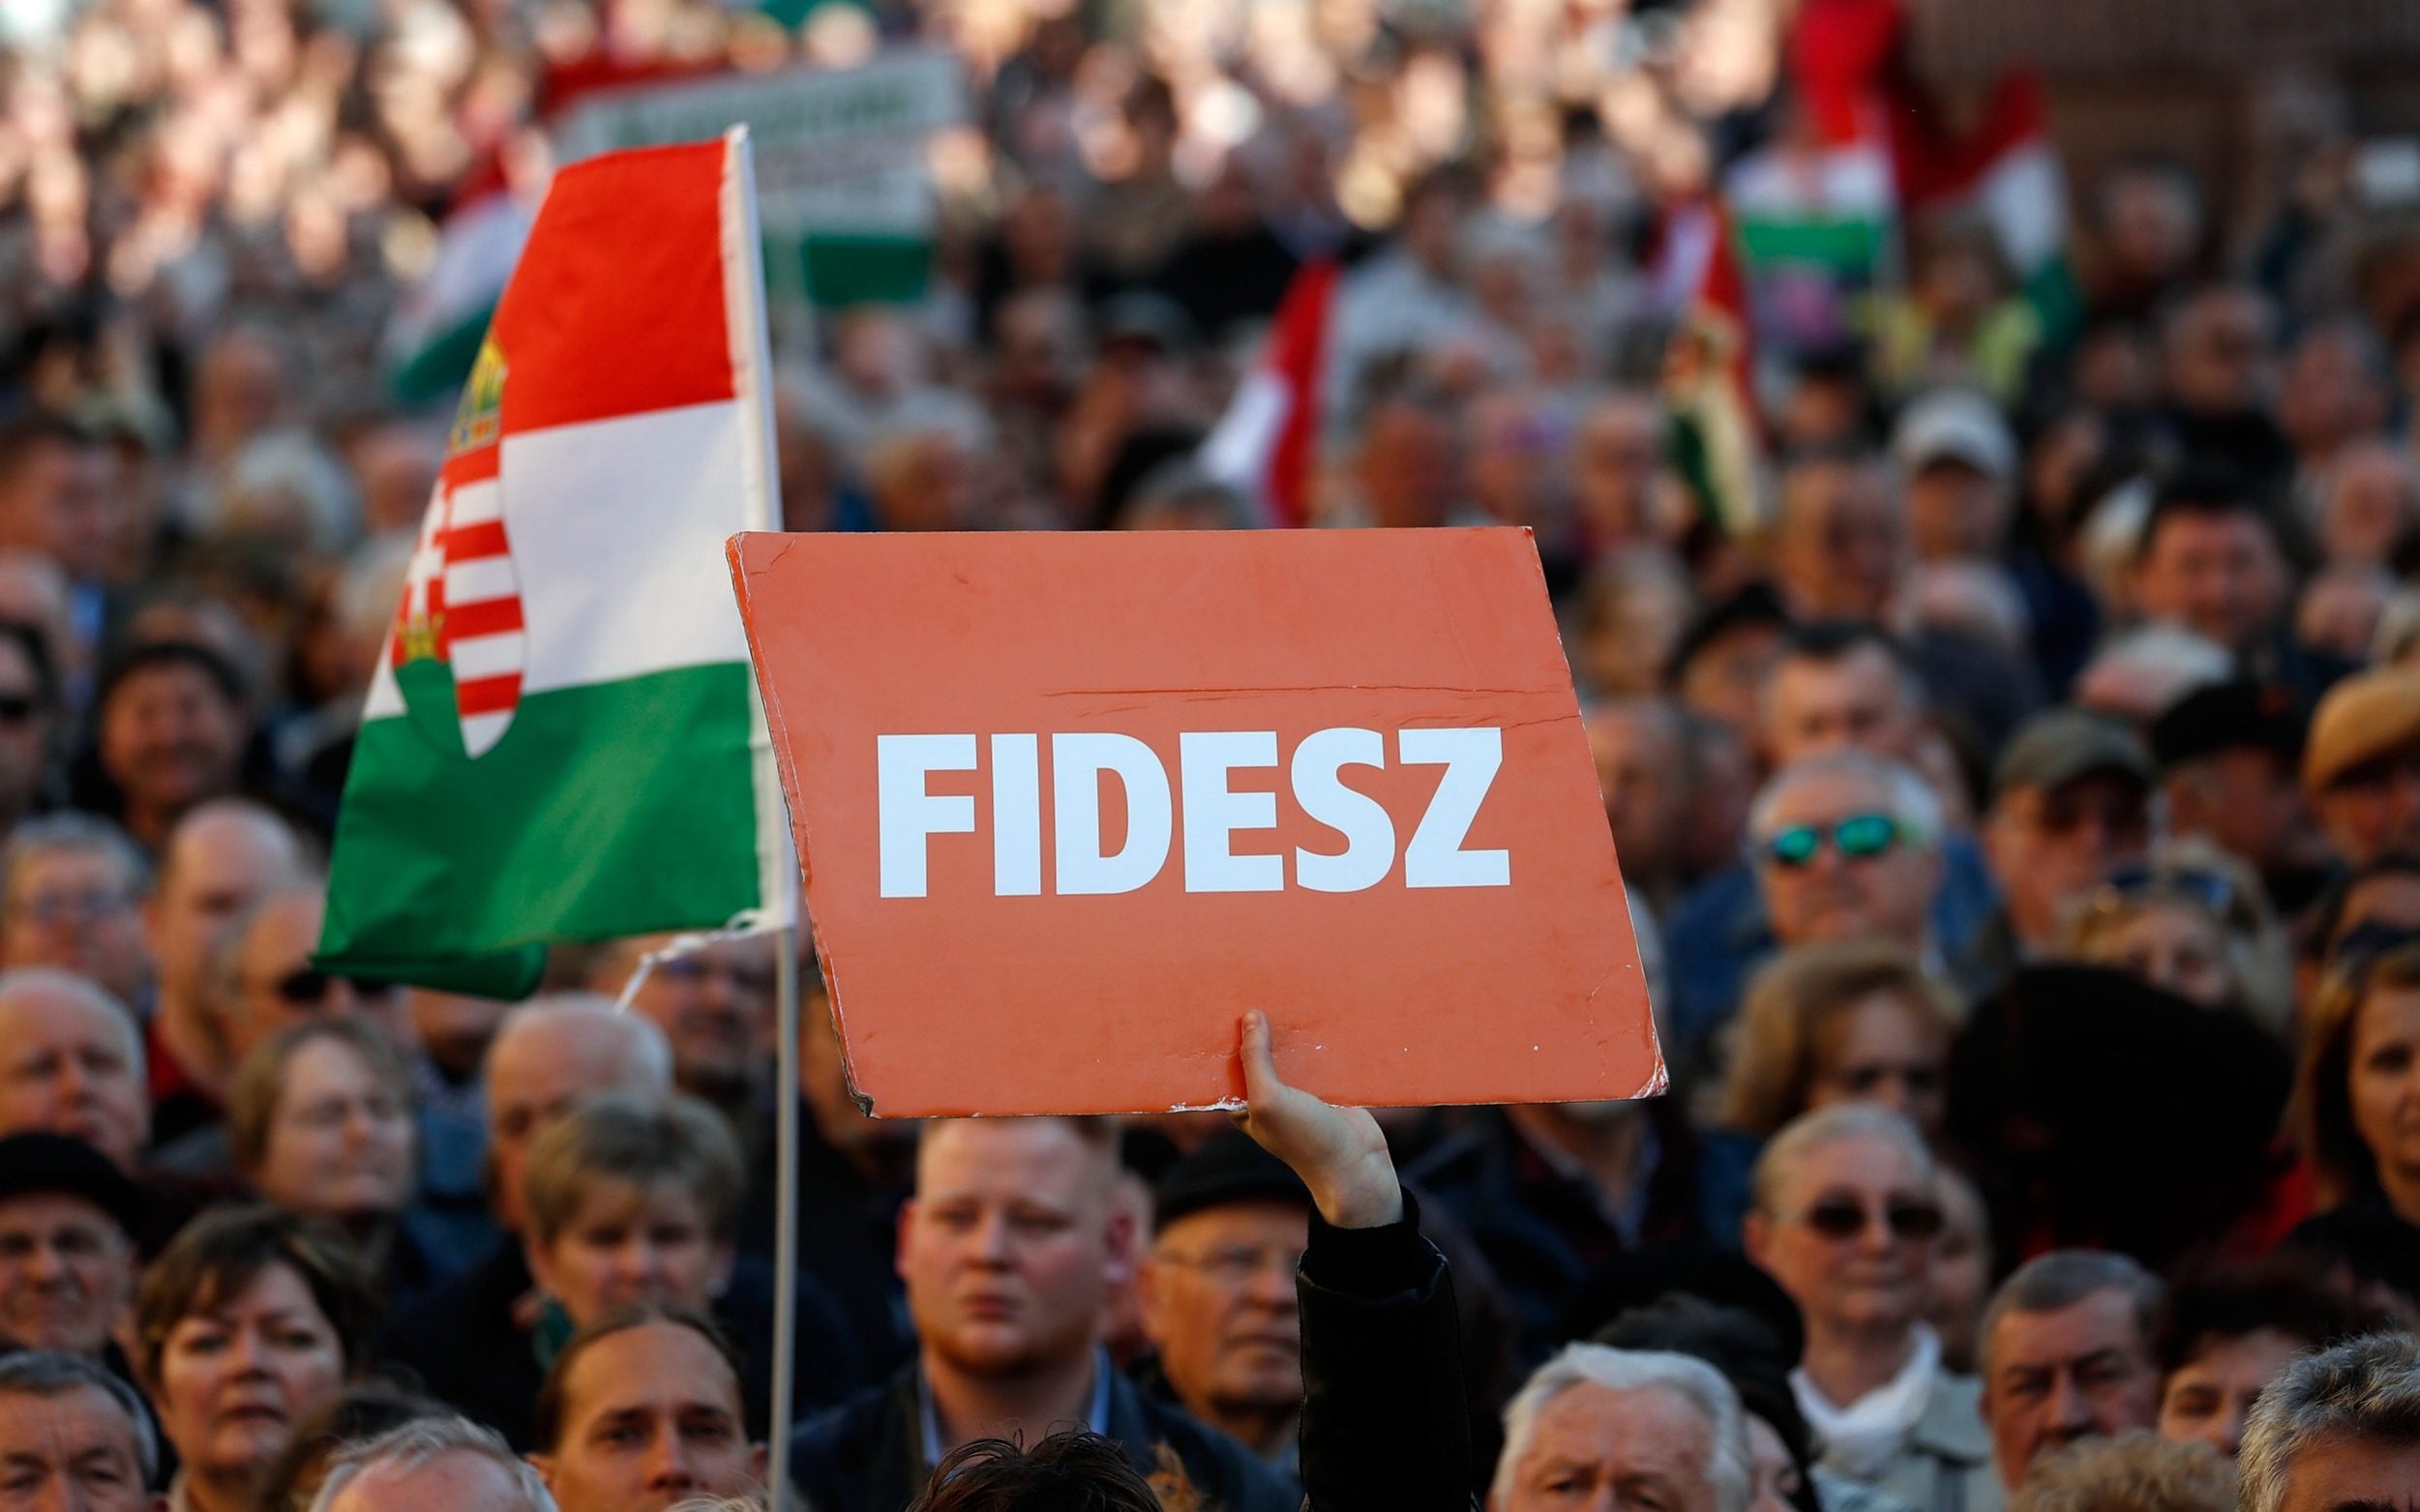 Fidesz party faces internal challenges amidst economic and political crises (Credits: Getty Images)